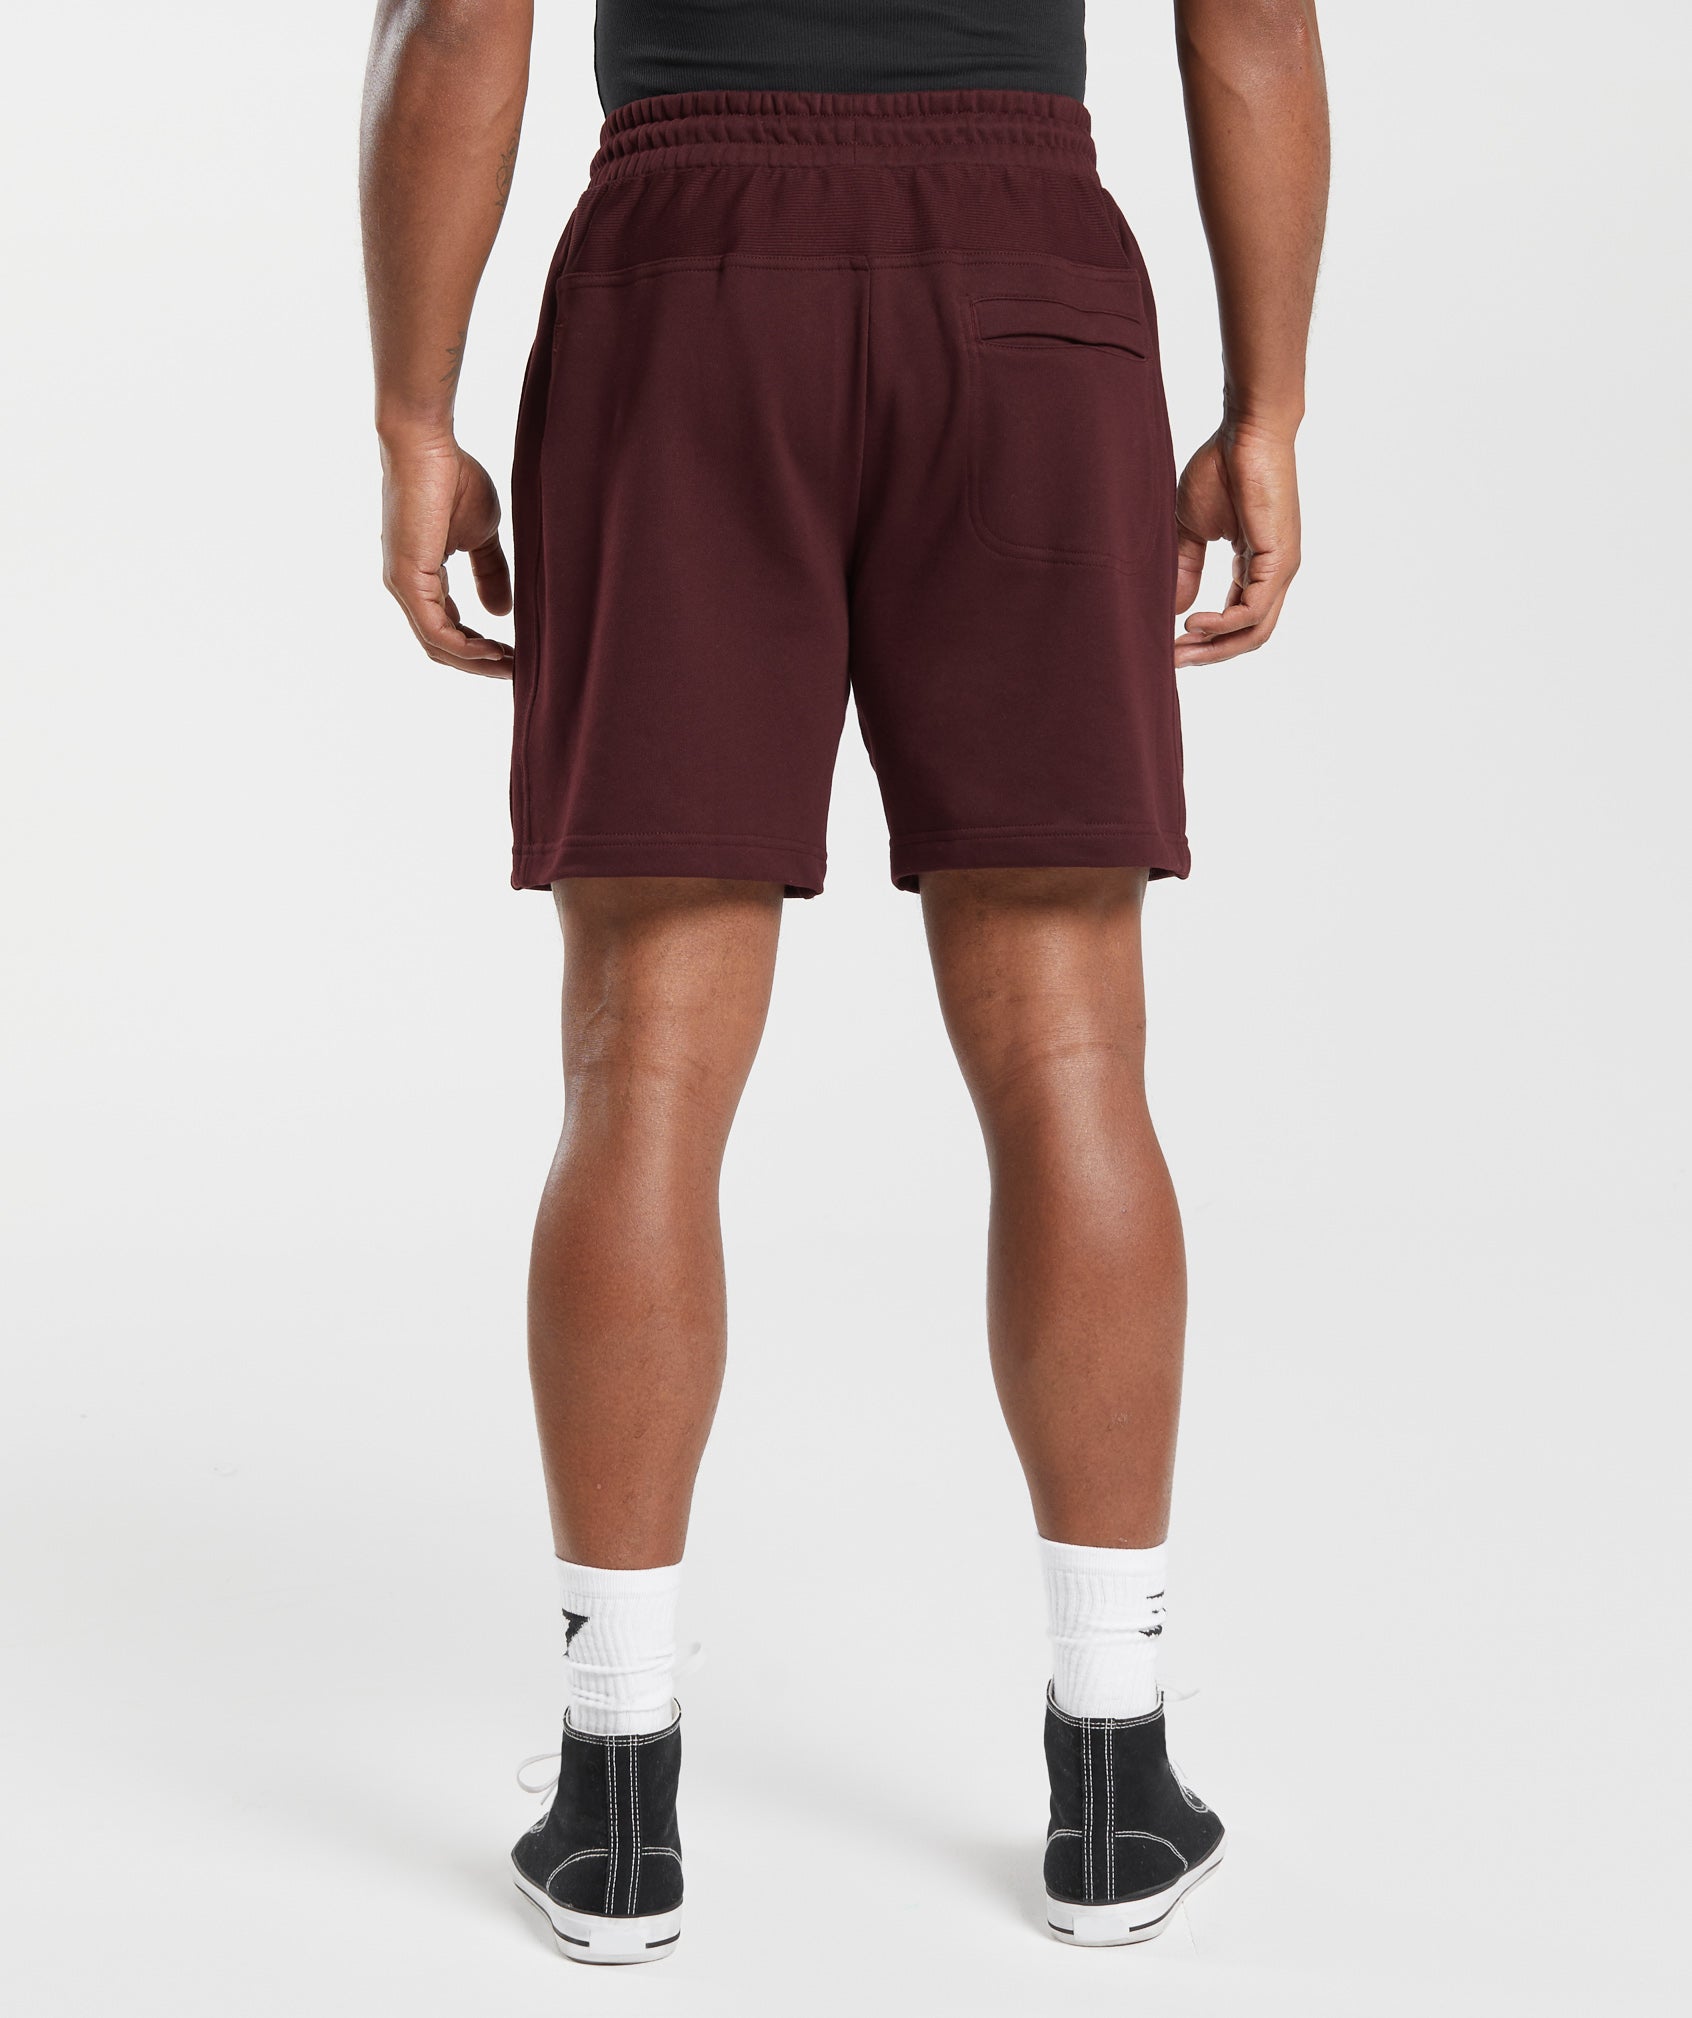 Gymshark Crest 7 Shorts - Washed Burgundy